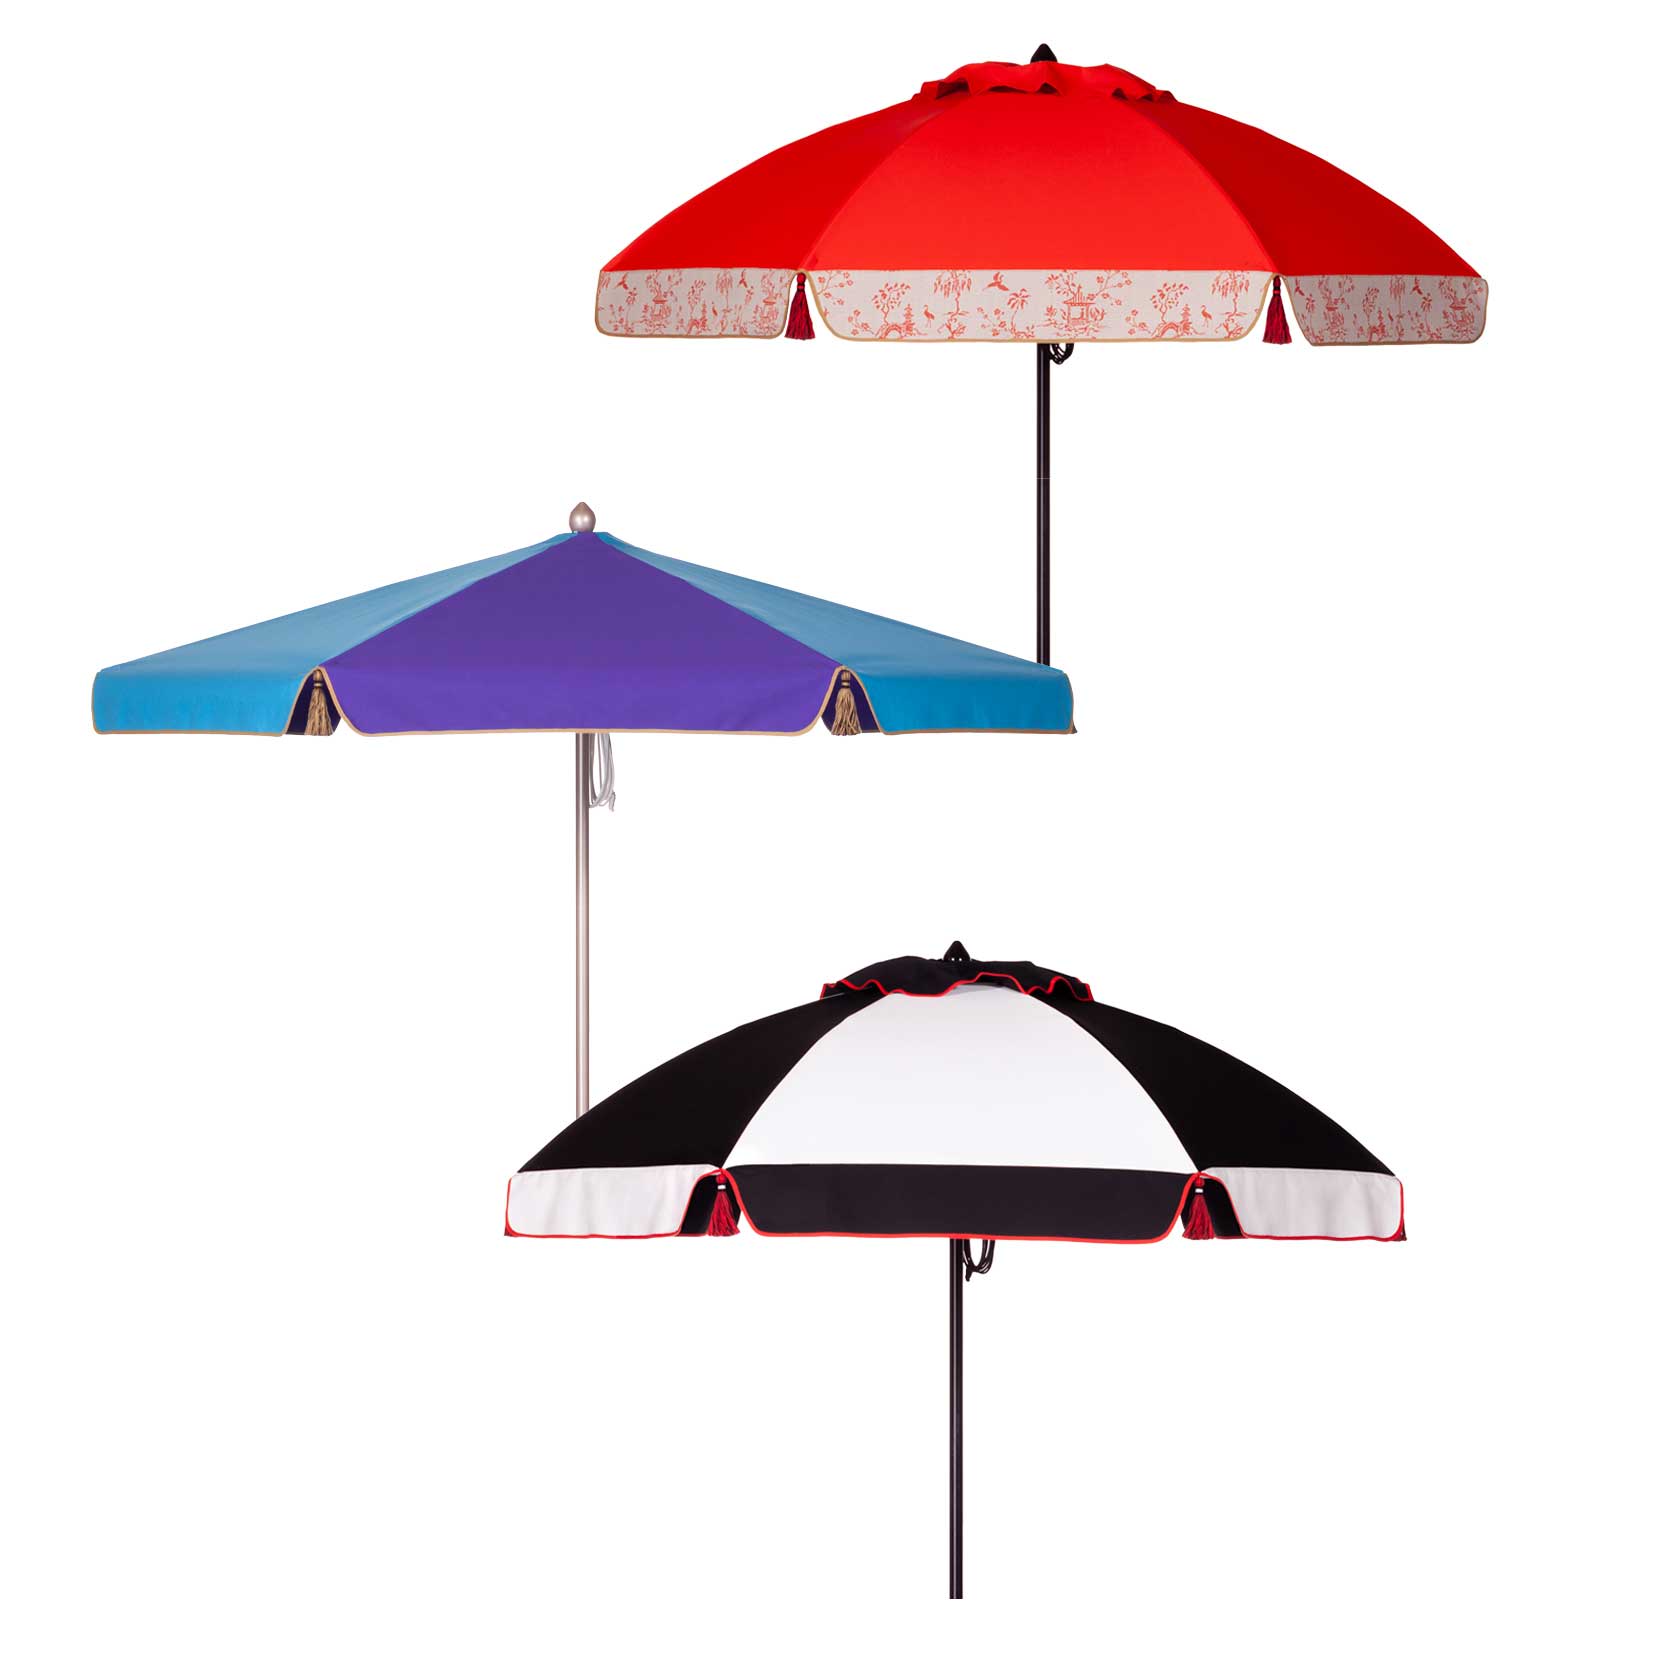 Tao Collection Umbrellas Image